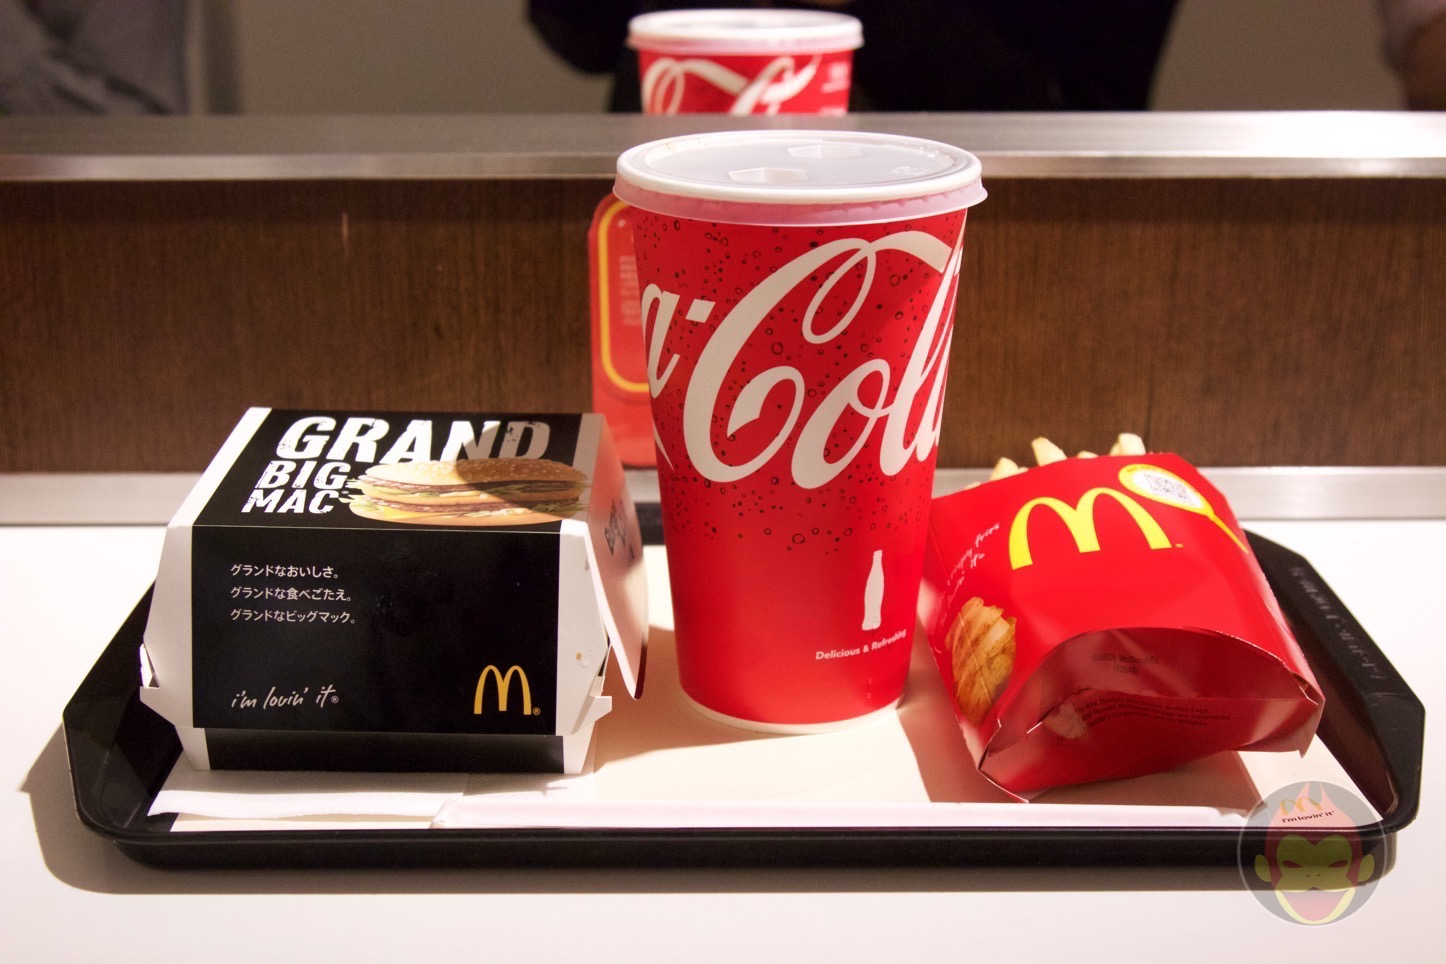 MacDonalds-Mega-Big-Mac-01.jpg